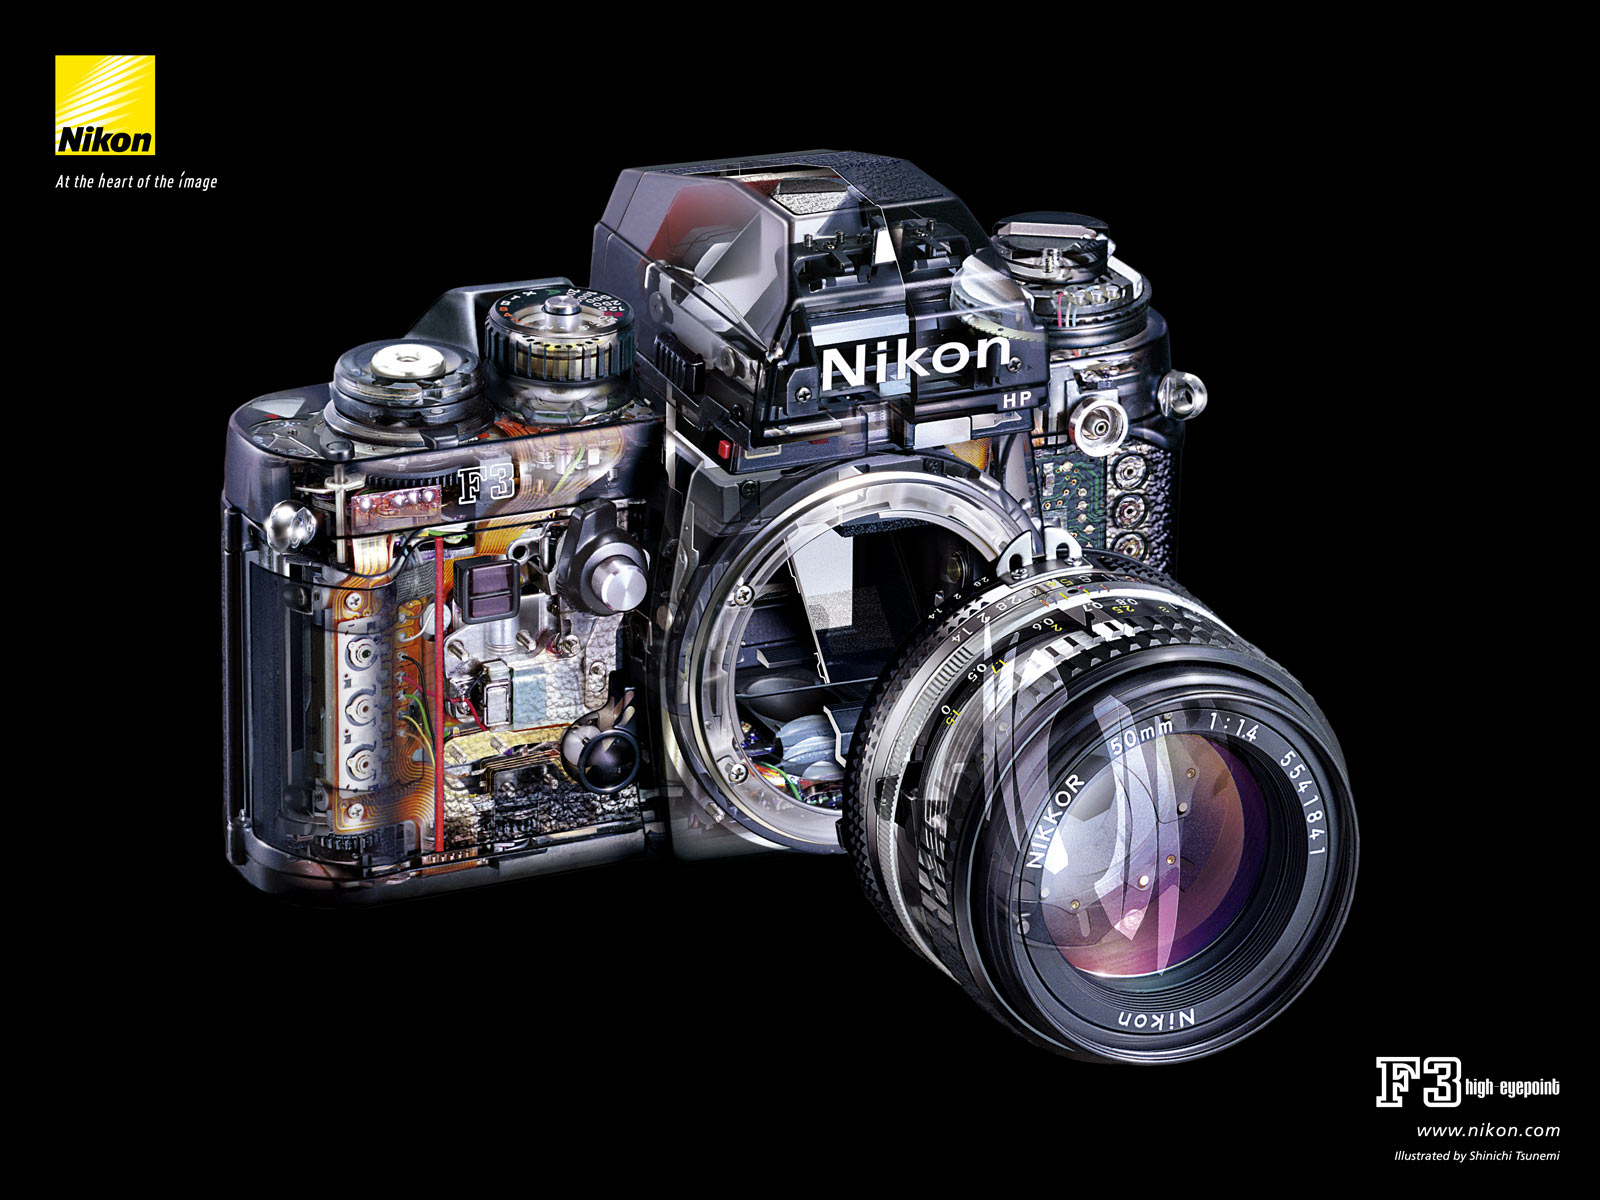 nikon wallpaper hd,telecamera,fotocamera reflex,camera digitale,fotocamera reflex a obiettivo singolo,lente